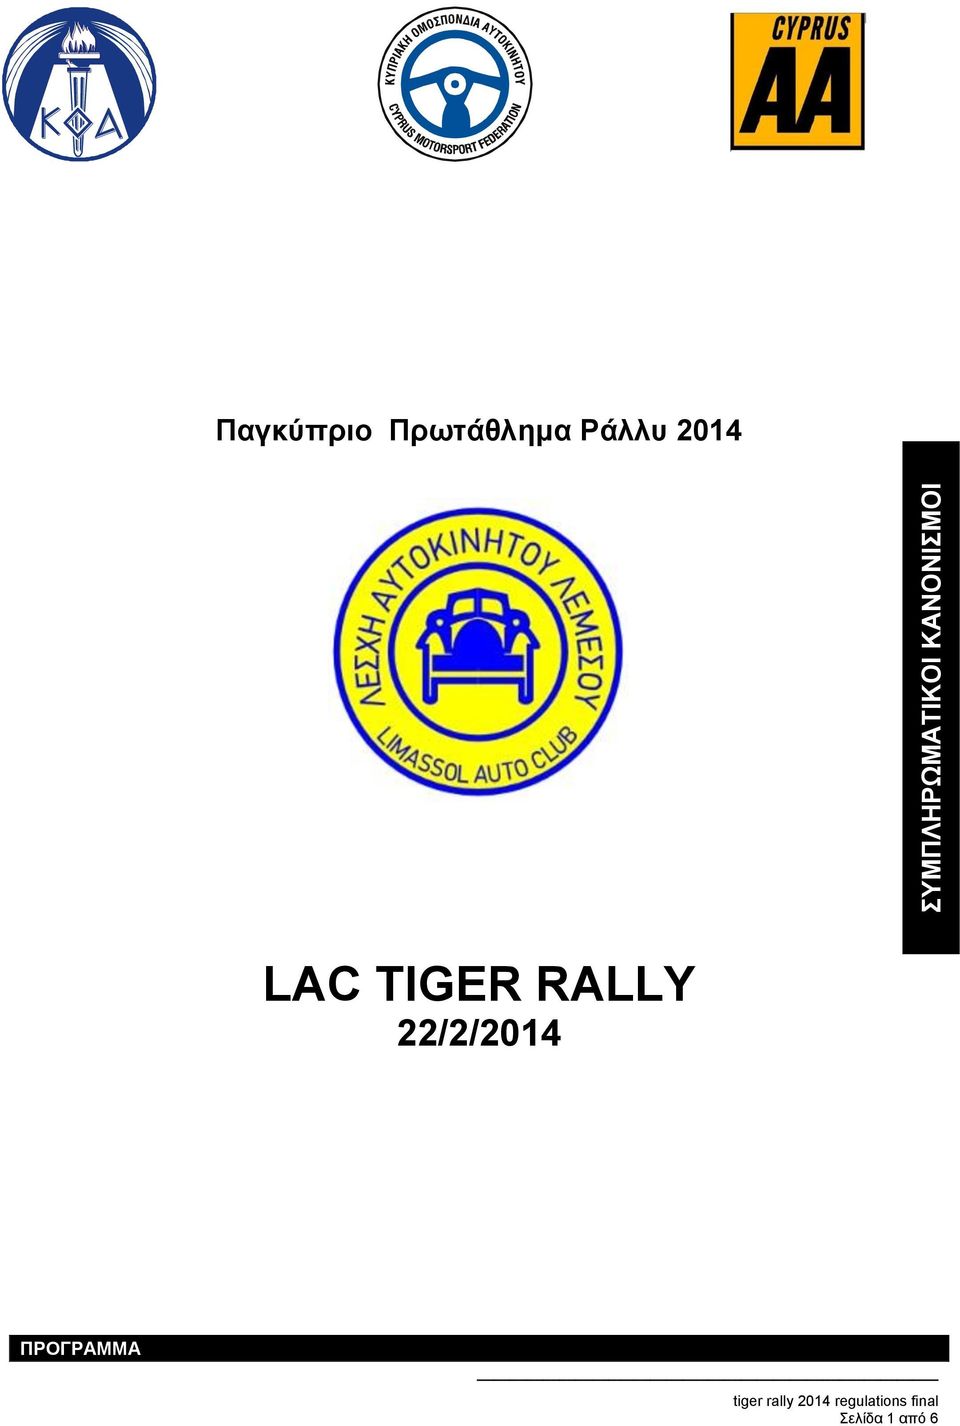 2014 LAC TIGER RALLY